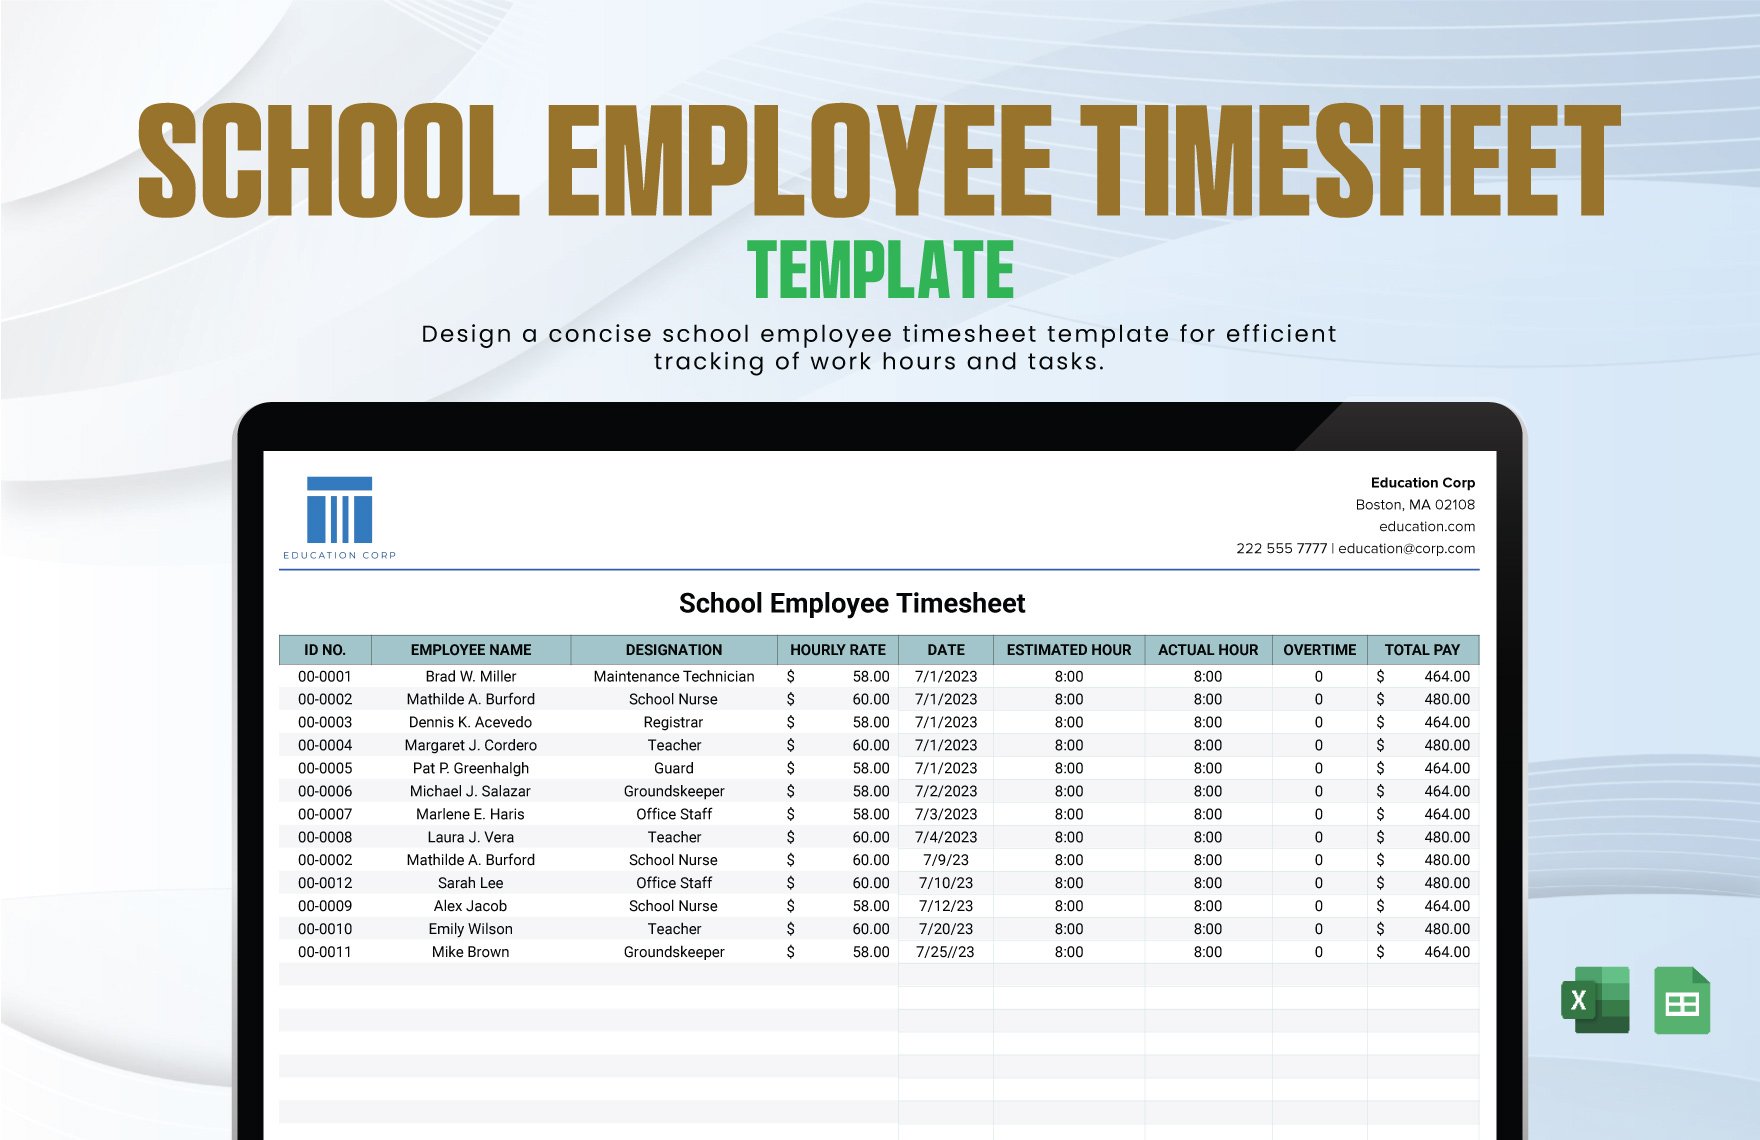 School Employee Timesheet Template in Excel, Google Sheets